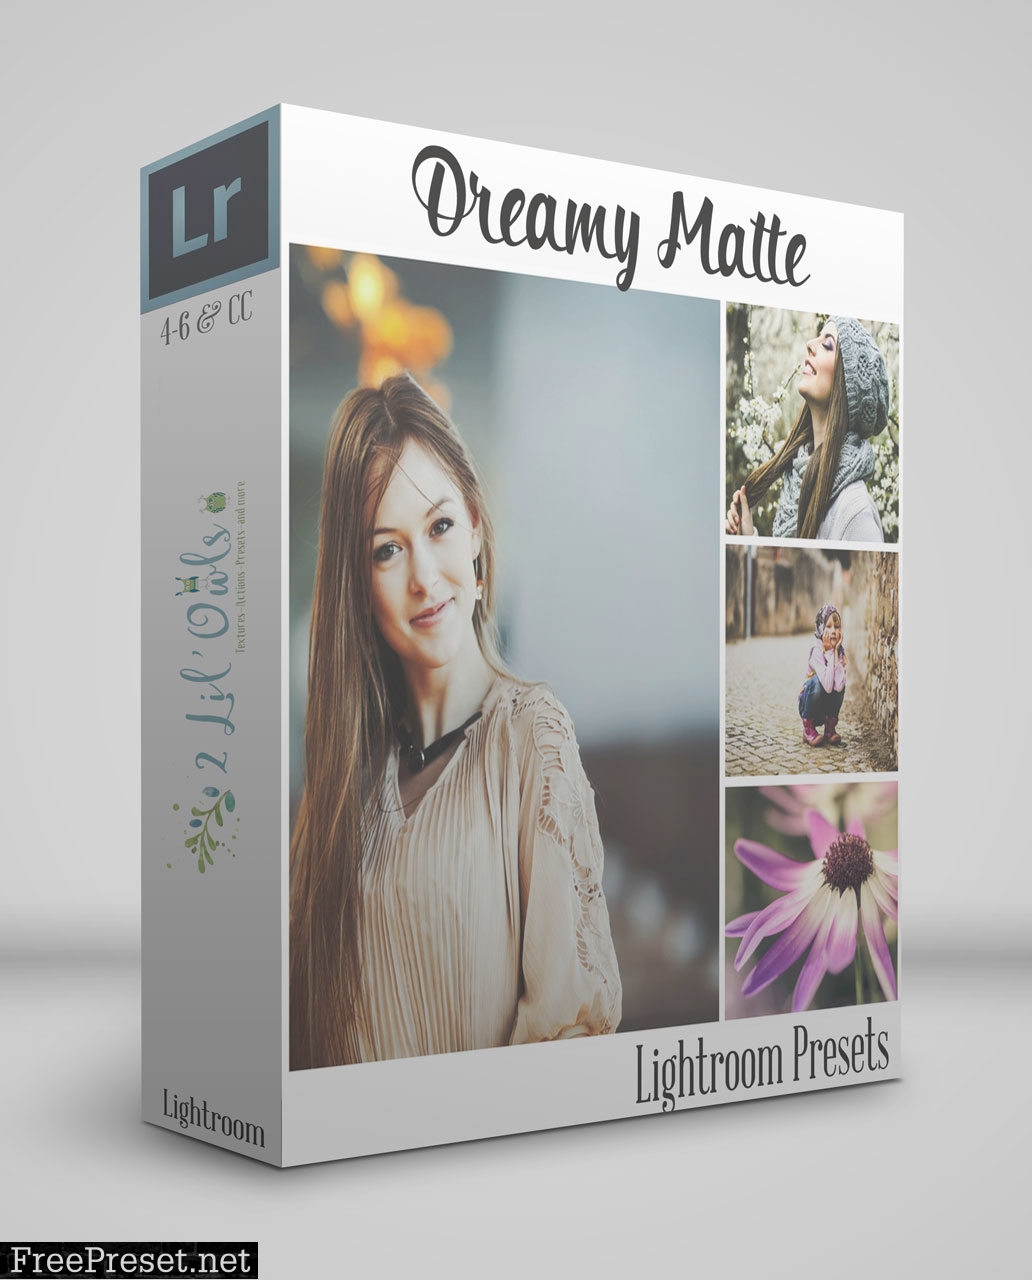 RETIRED – Dreamy Matte Lightroom Presets